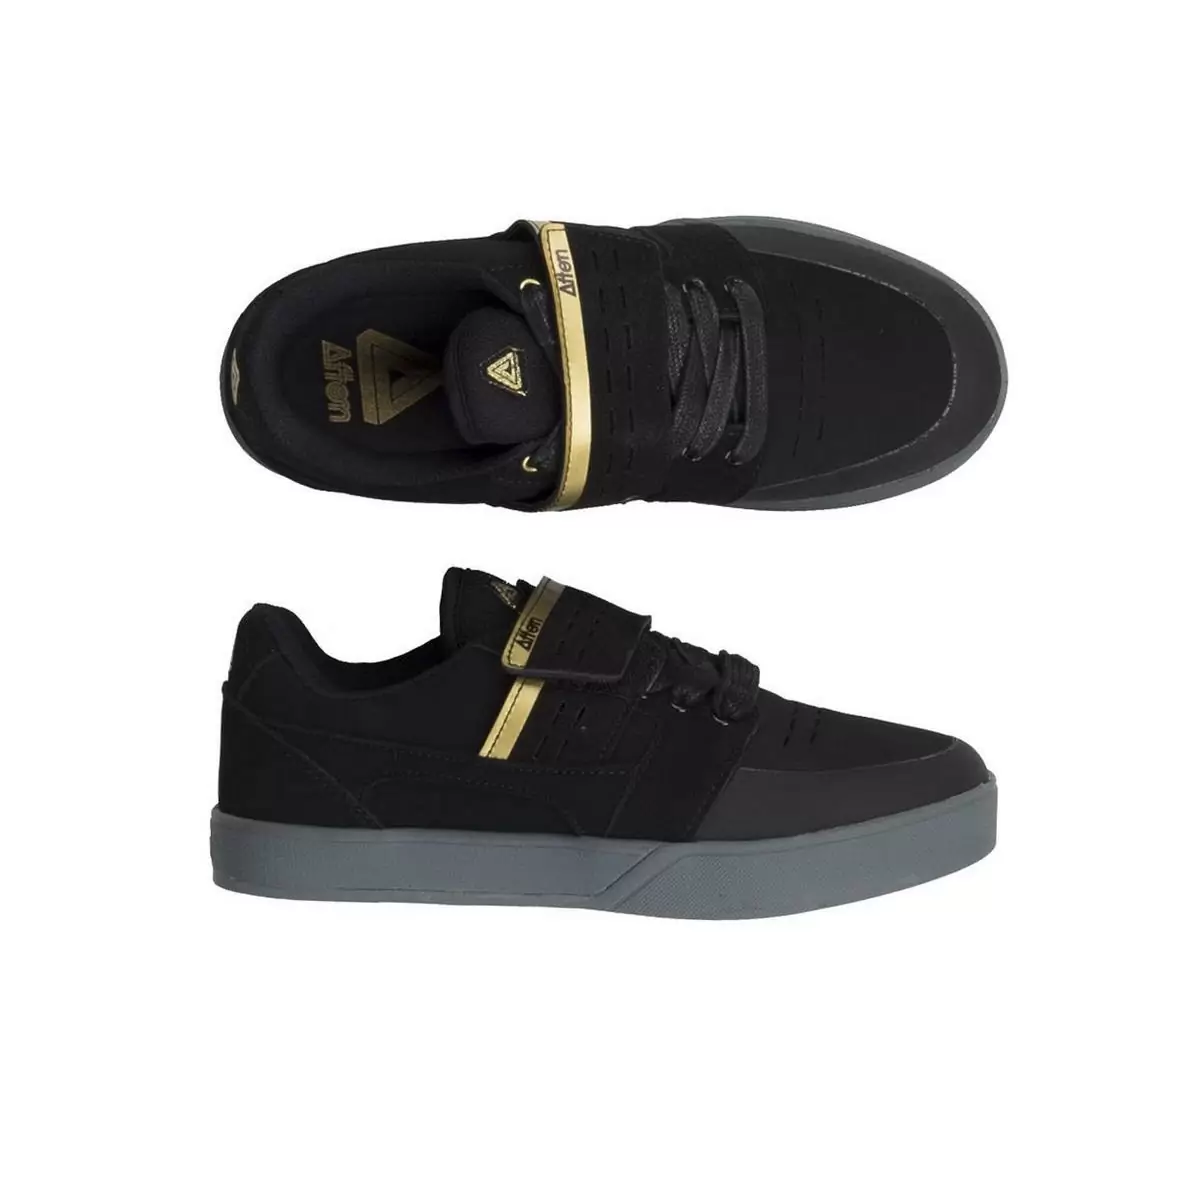 MTB Shoes Vectal SPD Black/Gold Size 46 - image